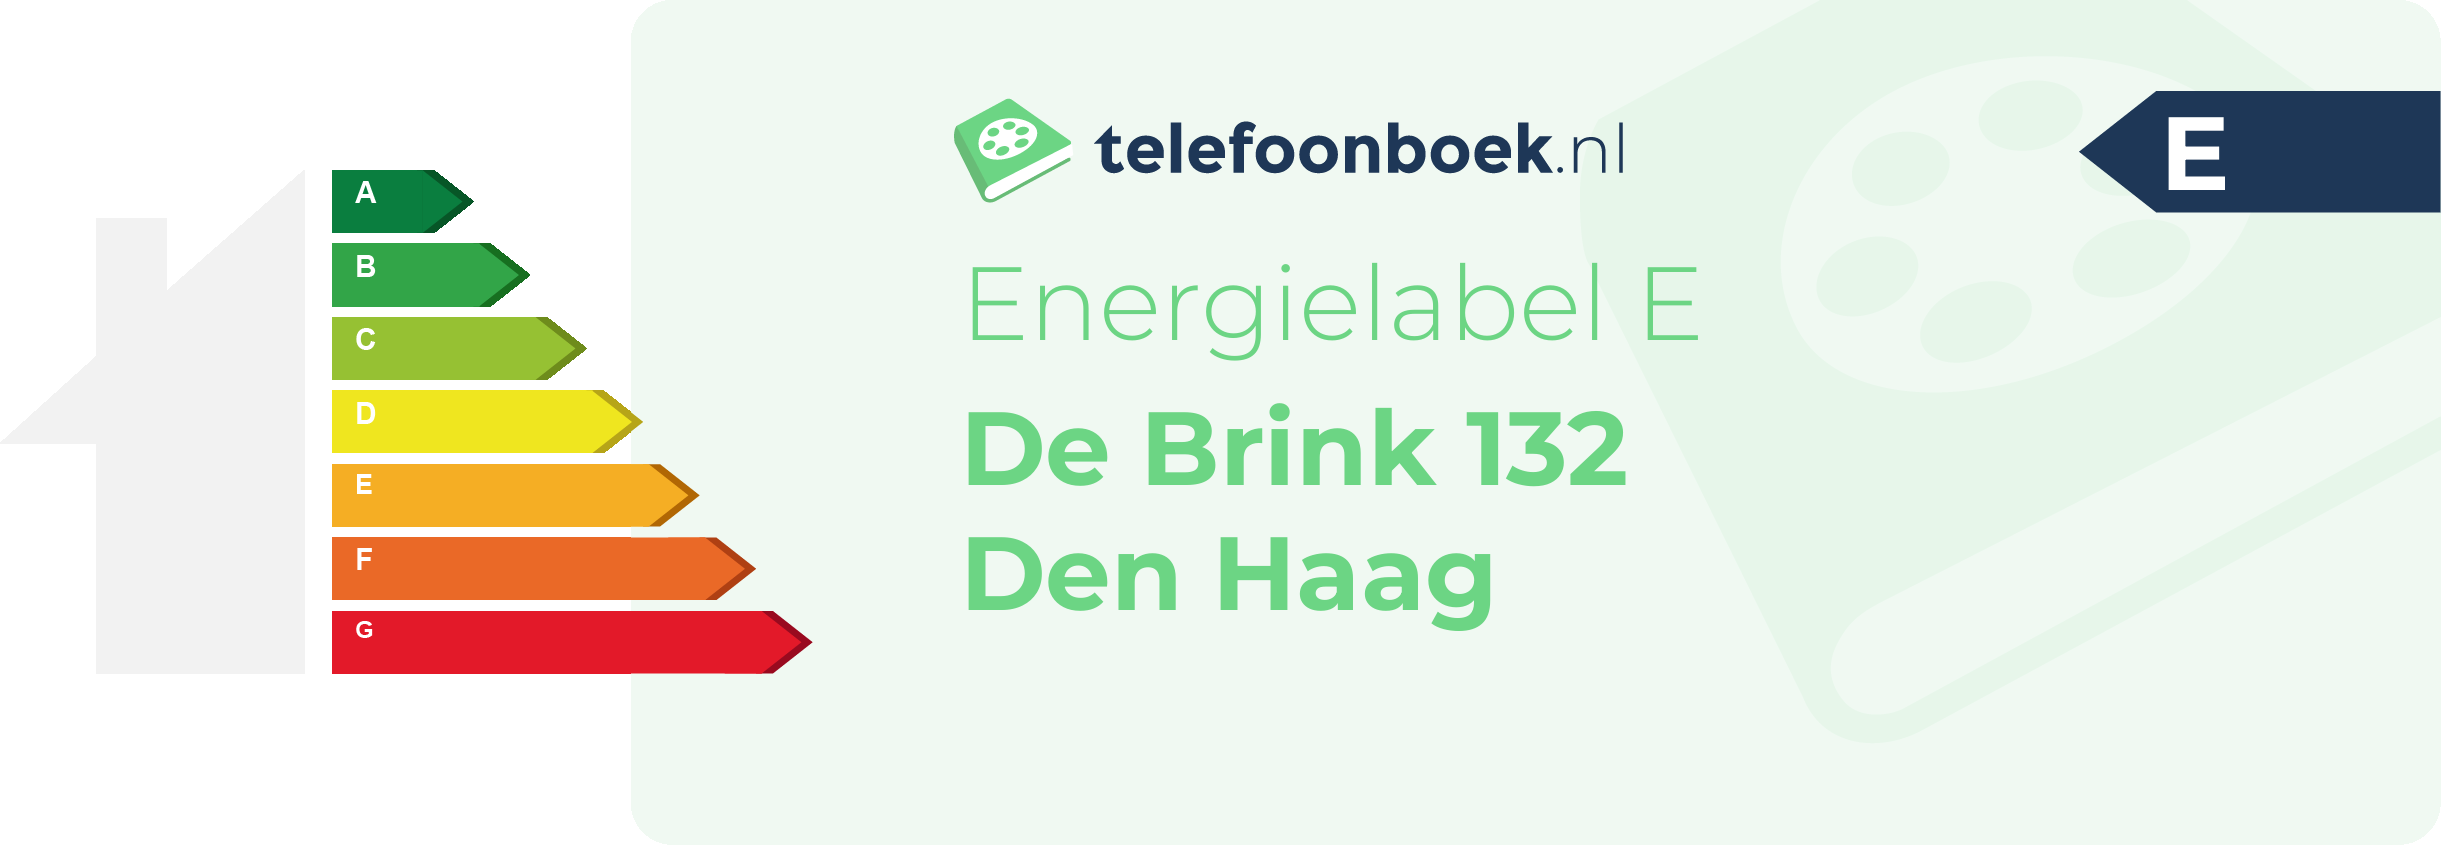 Energielabel De Brink 132 Den Haag